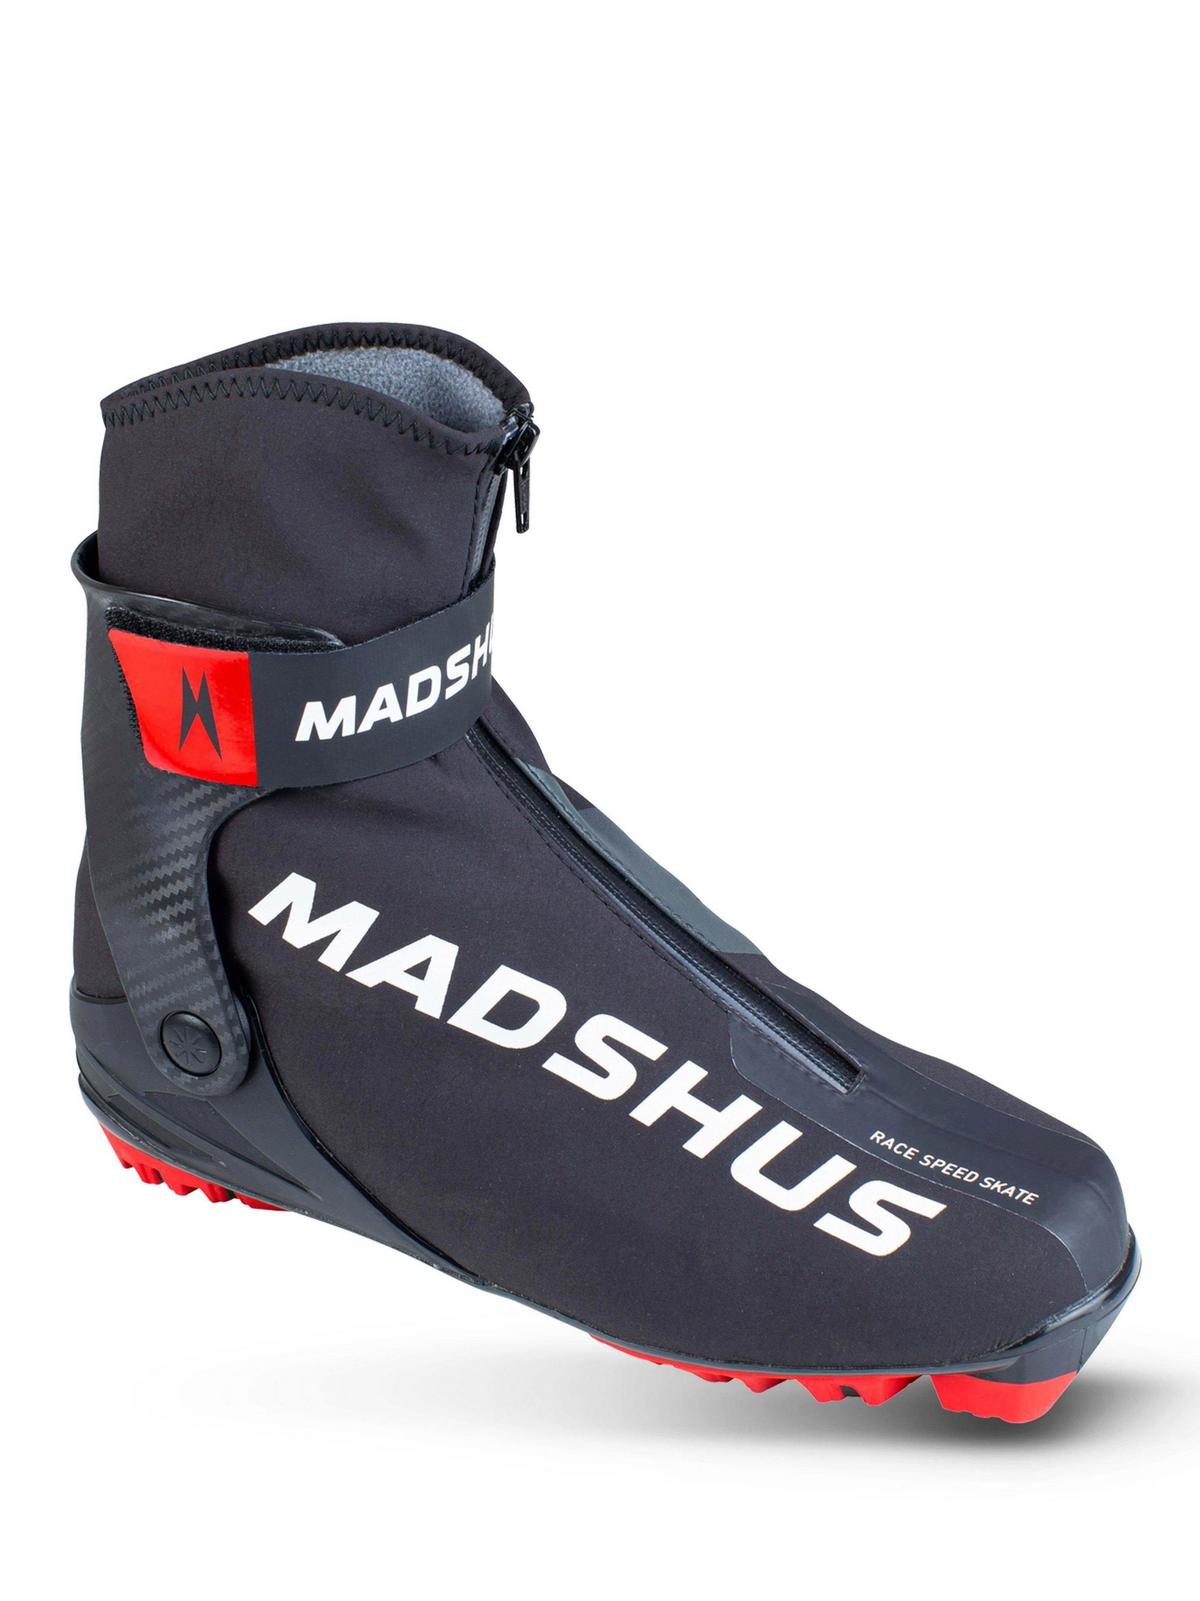 Madshus Speed Skate | Madshus Skis